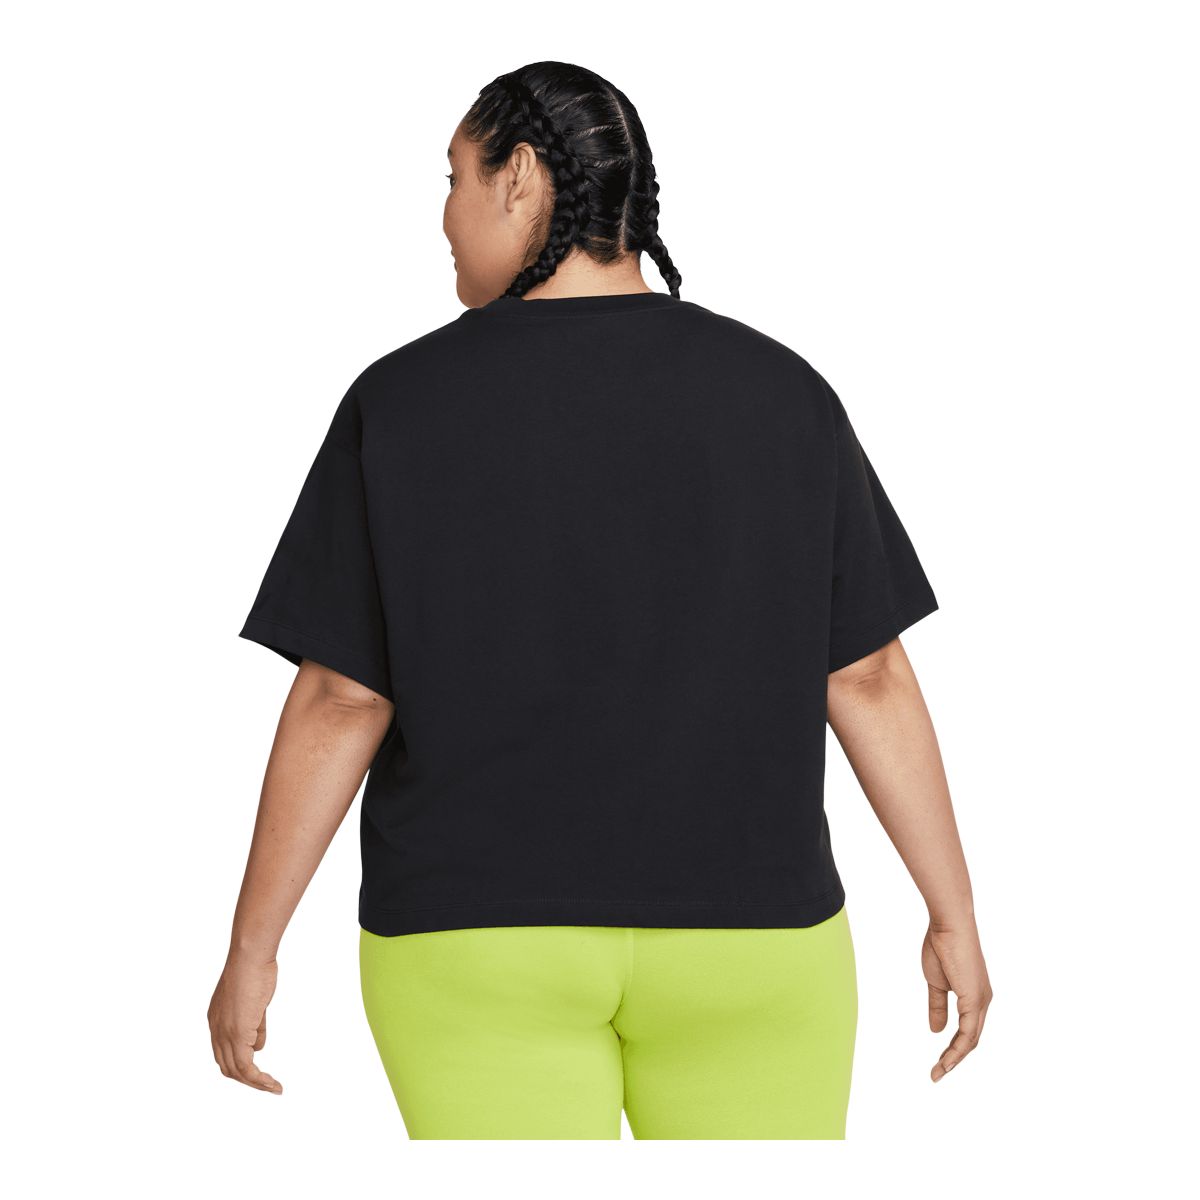 Nike Training Nike Yoga Dri-FIT boxy t-shirt in khaki - ShopStyle